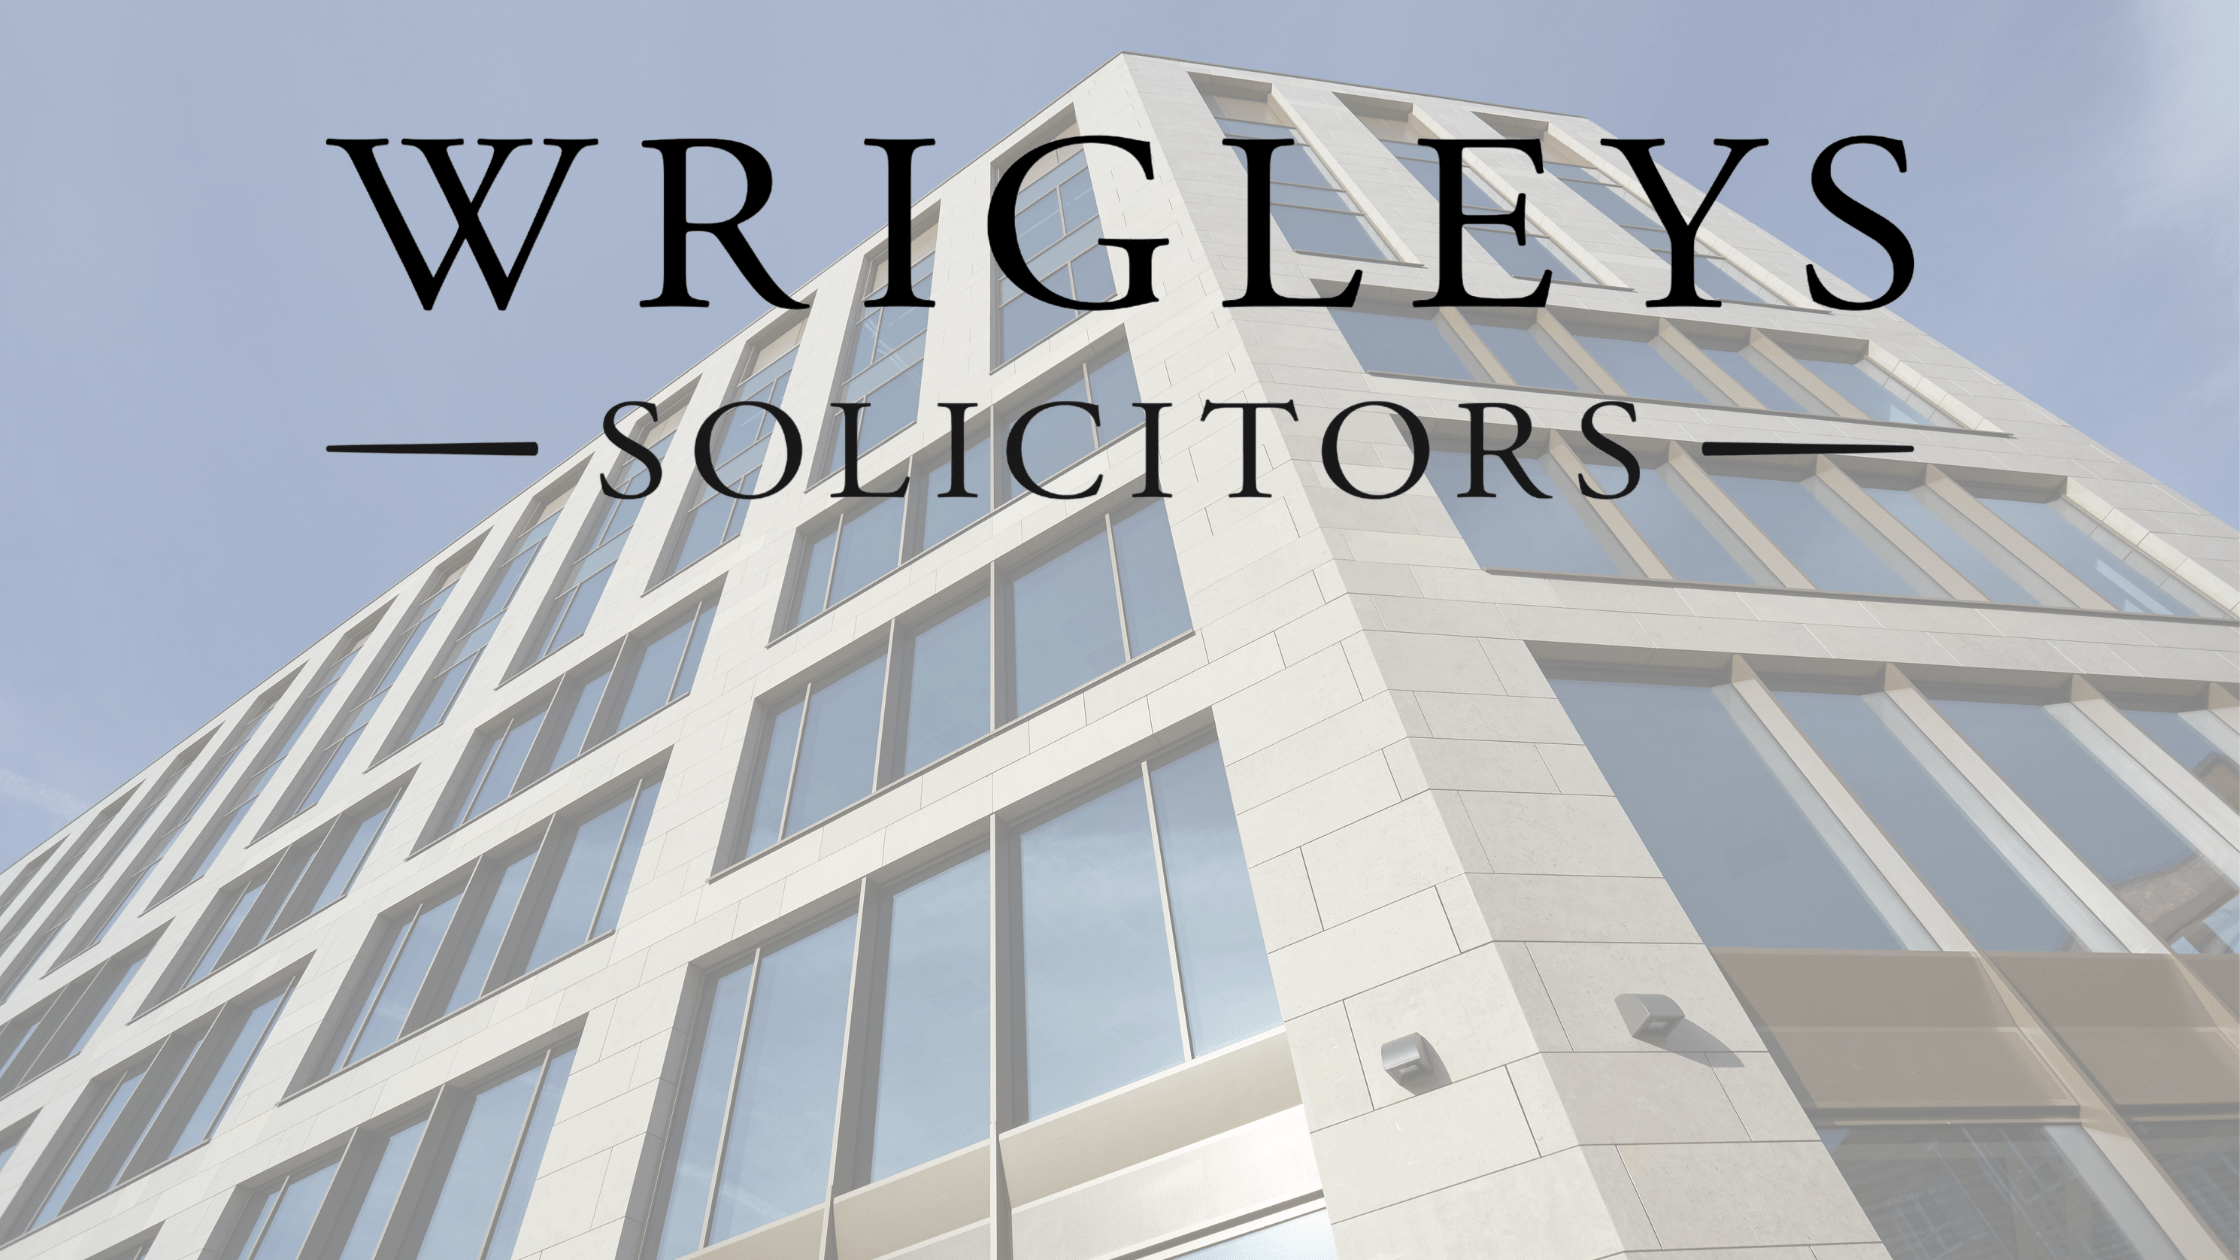 Wrigleys Solicitors announces Wellington Place move